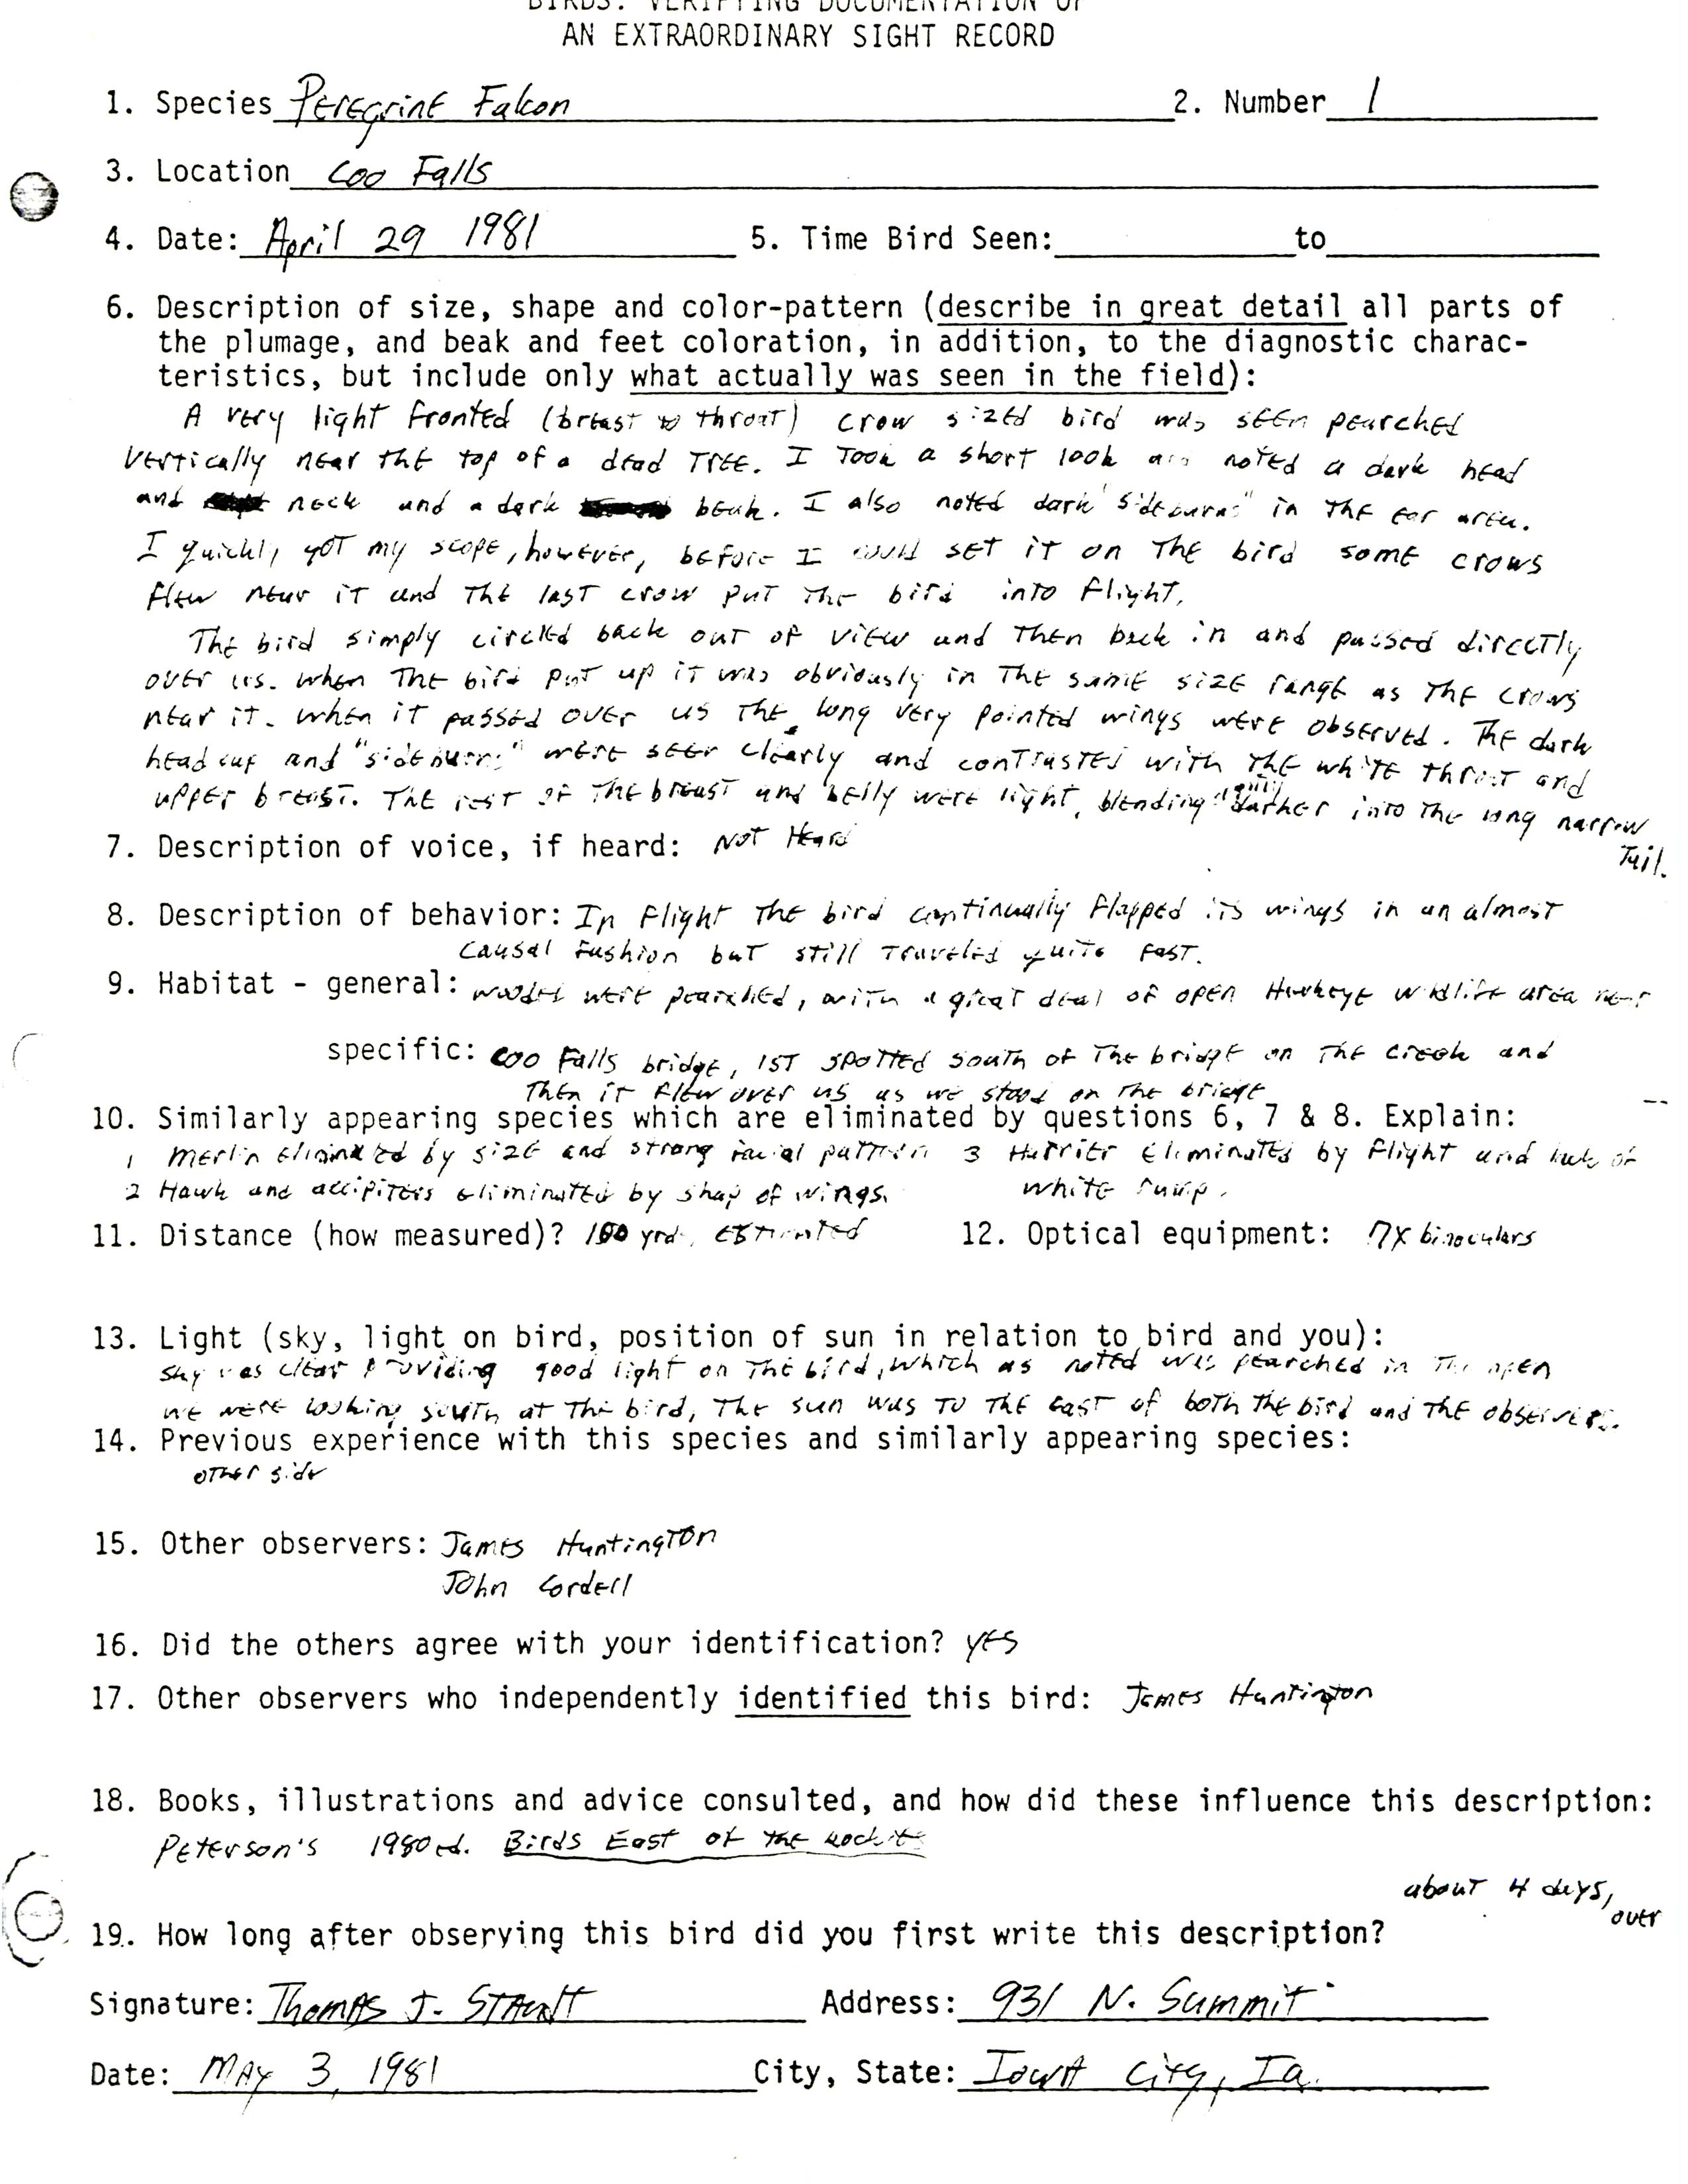 Rare bird documentation form for Peregrine Falcon at Cou Falls, 1981